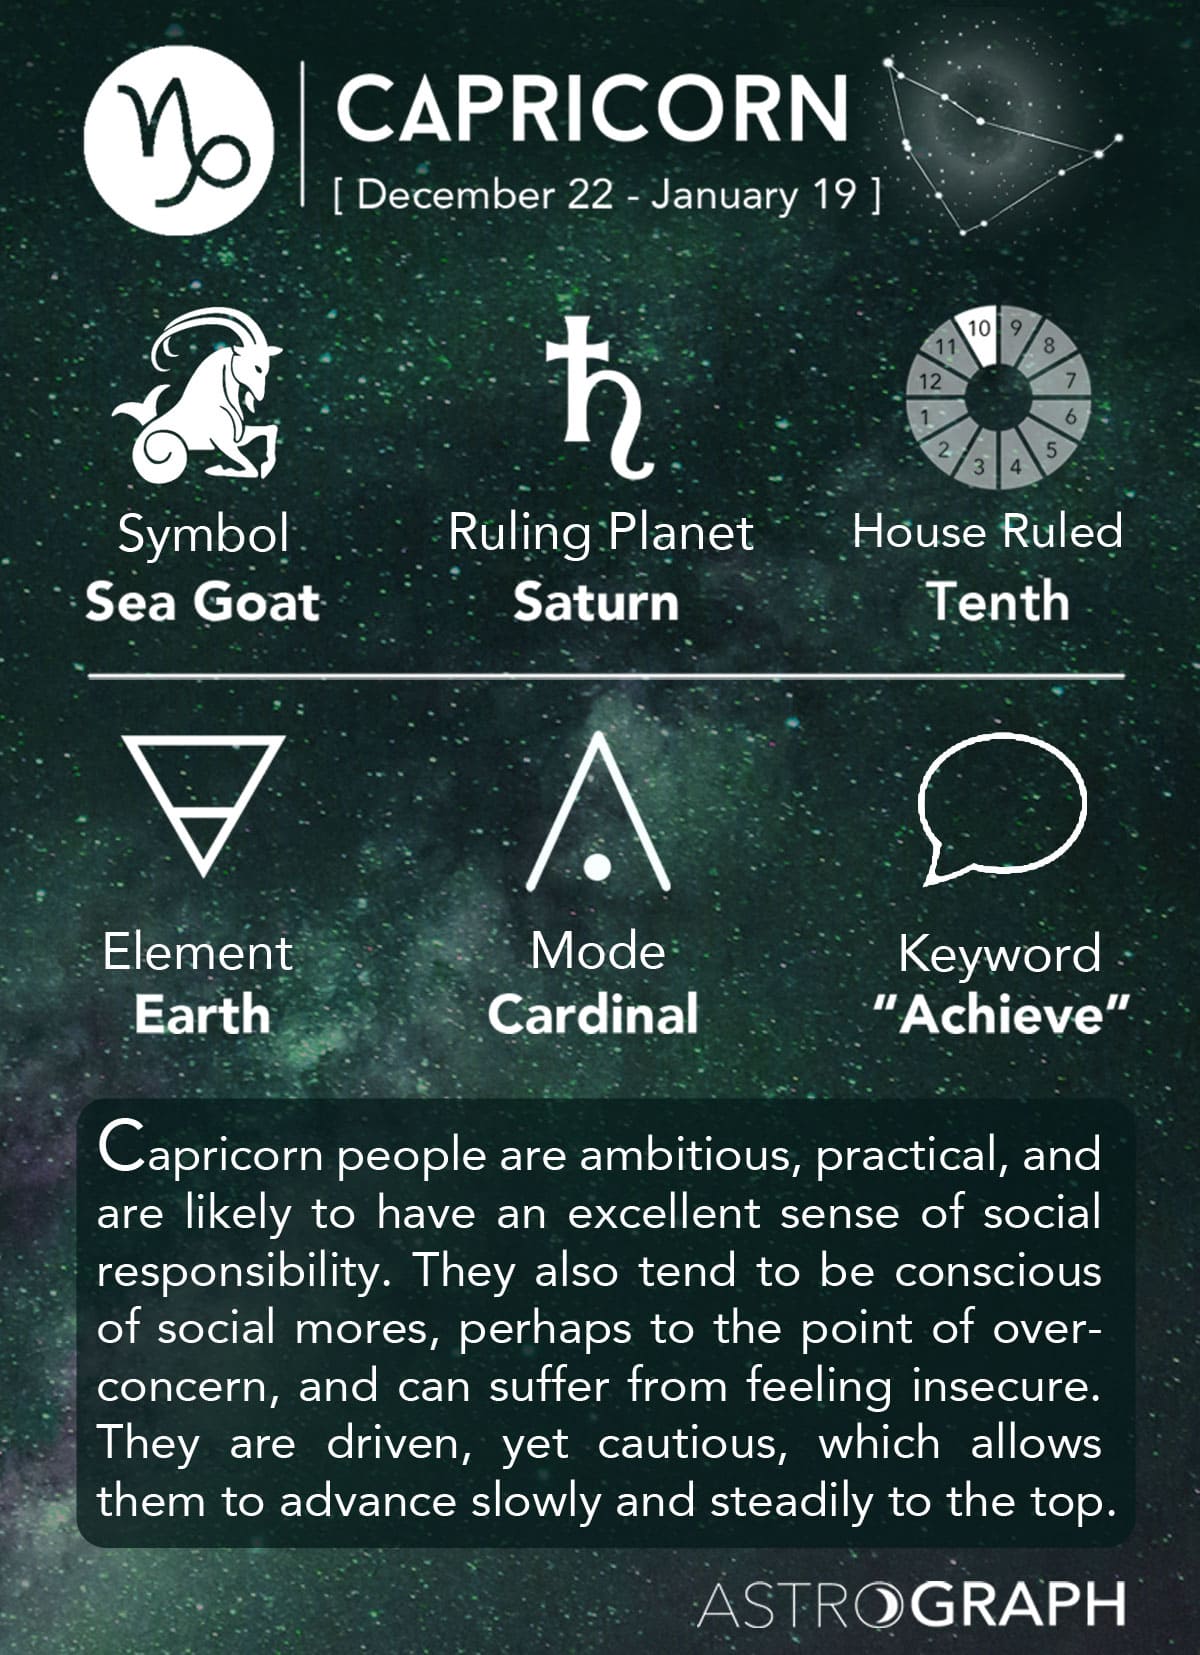 Capricorn zodiac